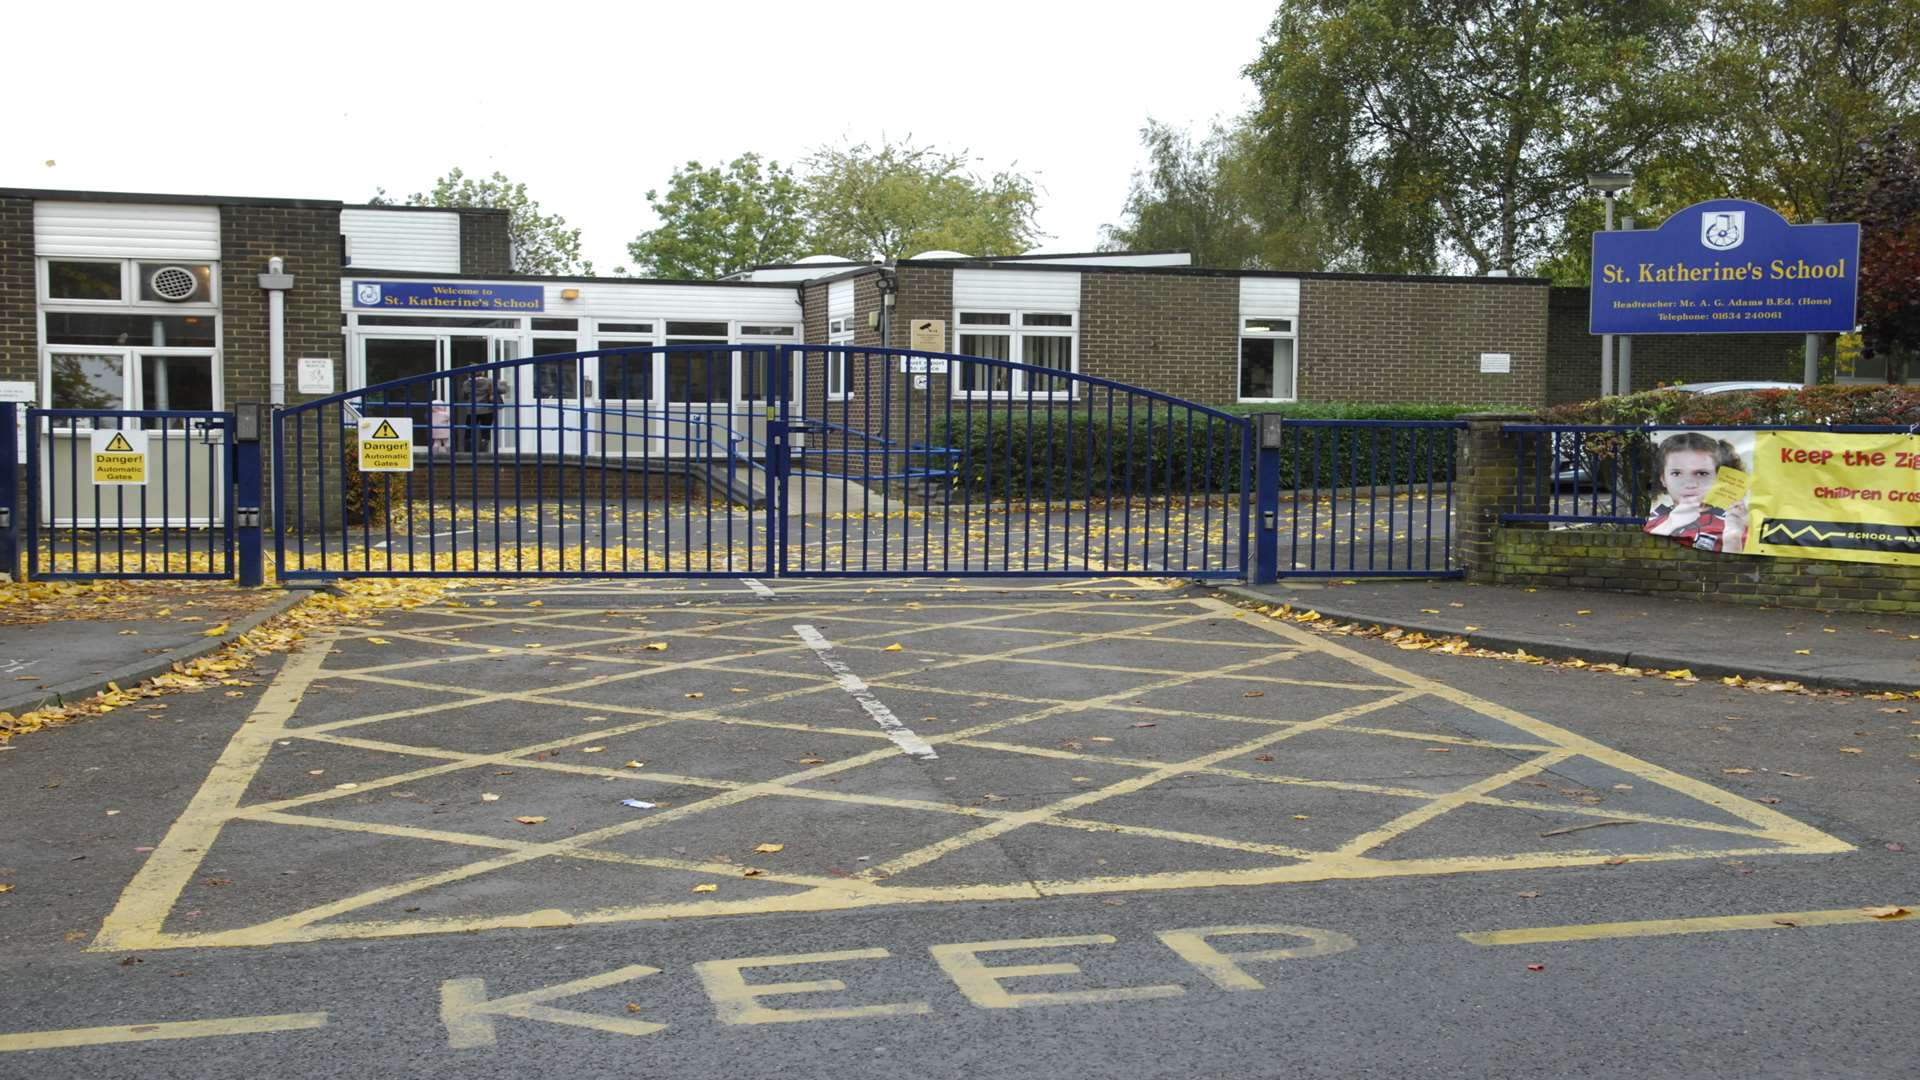 St Katherine's Primary School, St Katherine's Lane, Snodland. Picture: Martin Apps